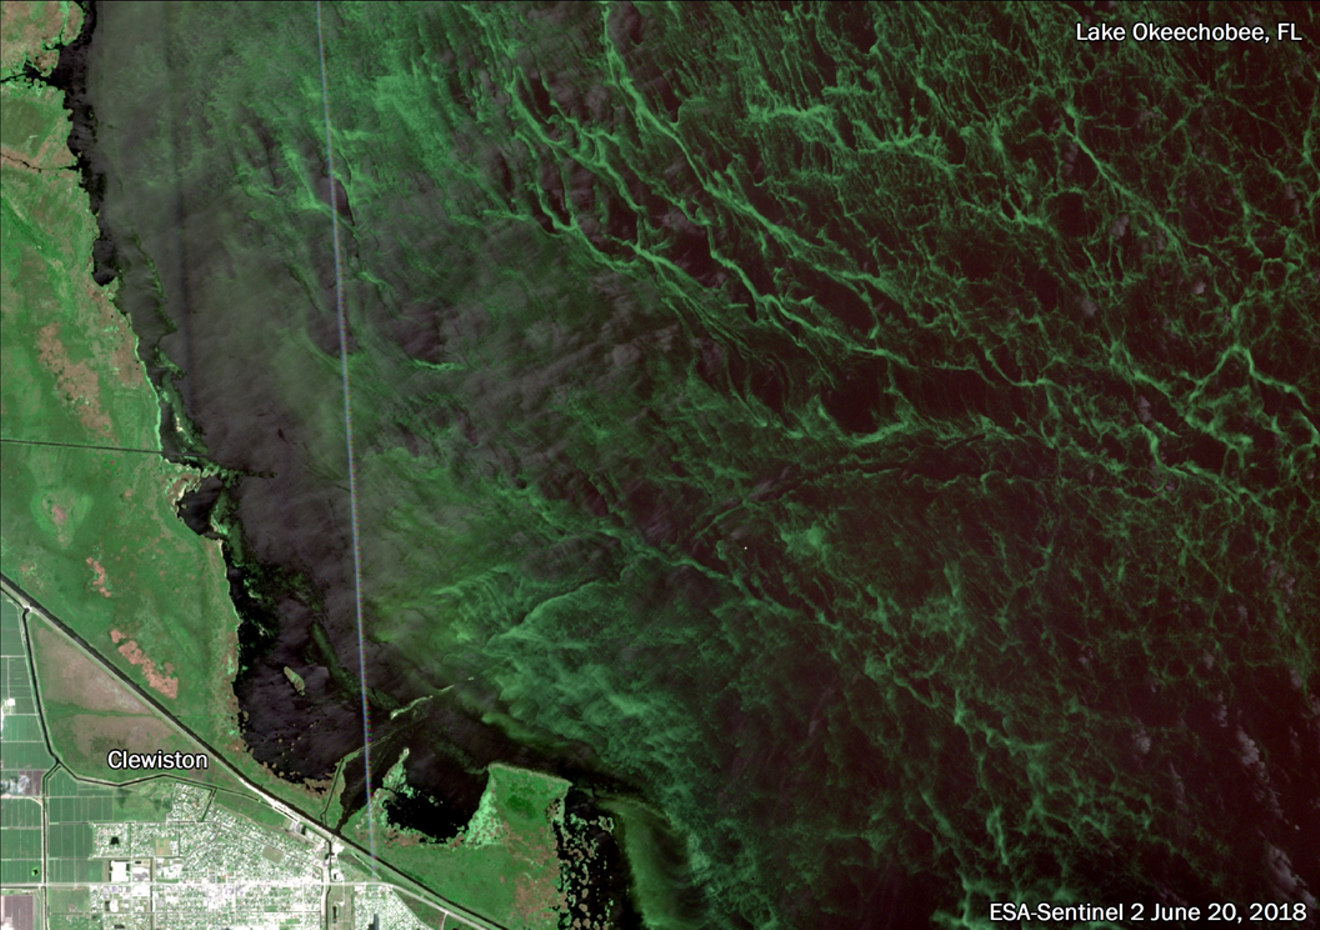 Ninety percent of Lake Okeechobee was covered in cyanobacteria in the summer of 2018.